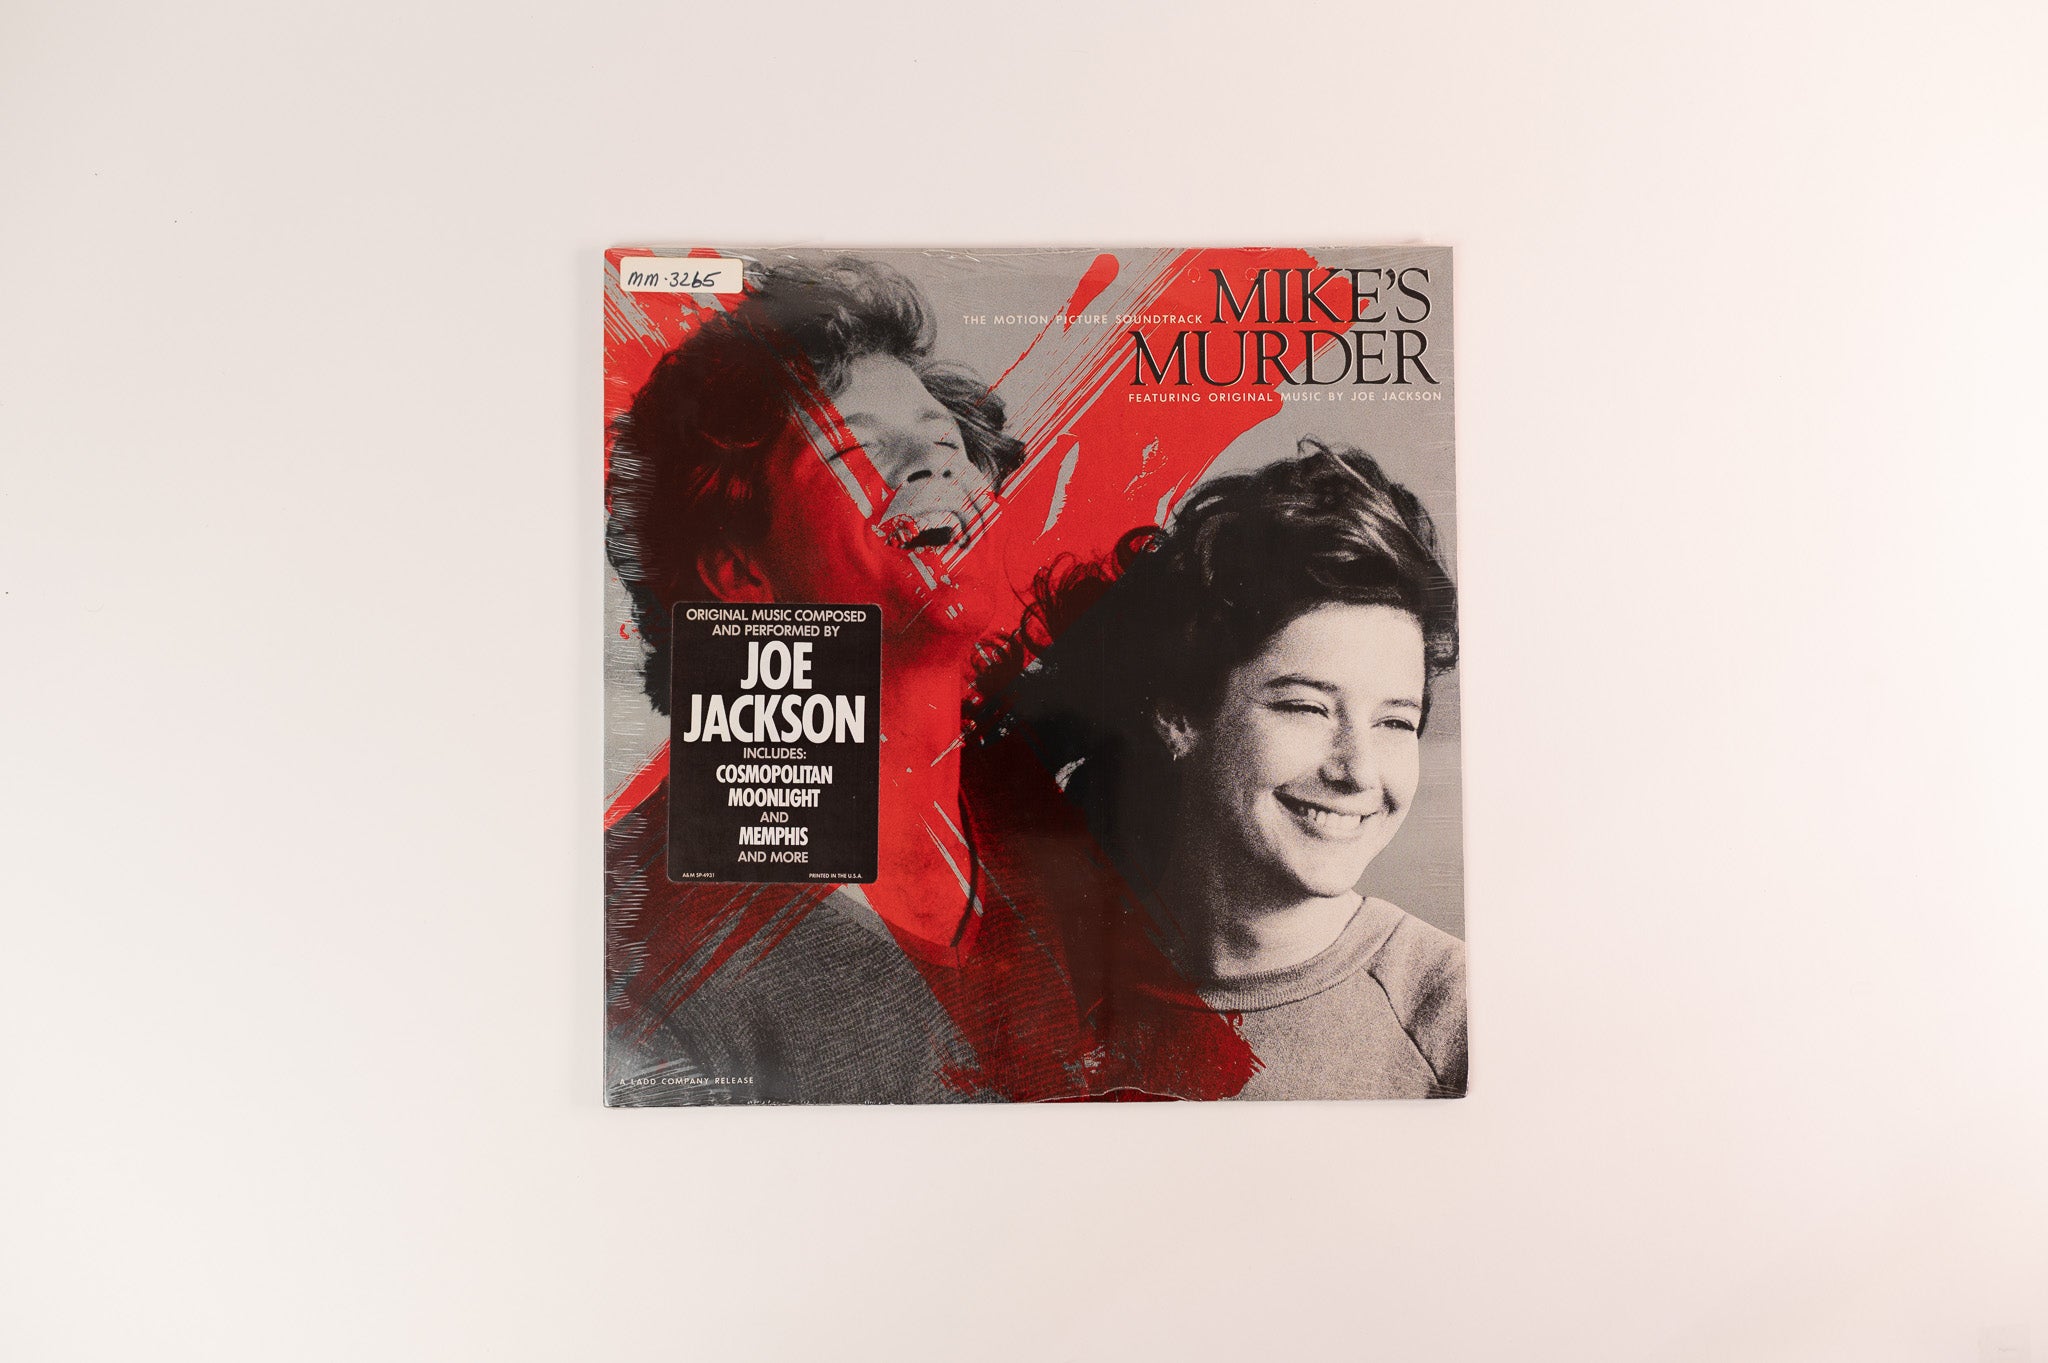 Joe Jackson - Mike's Murder (Original Soundtrack) on A&M Sealed